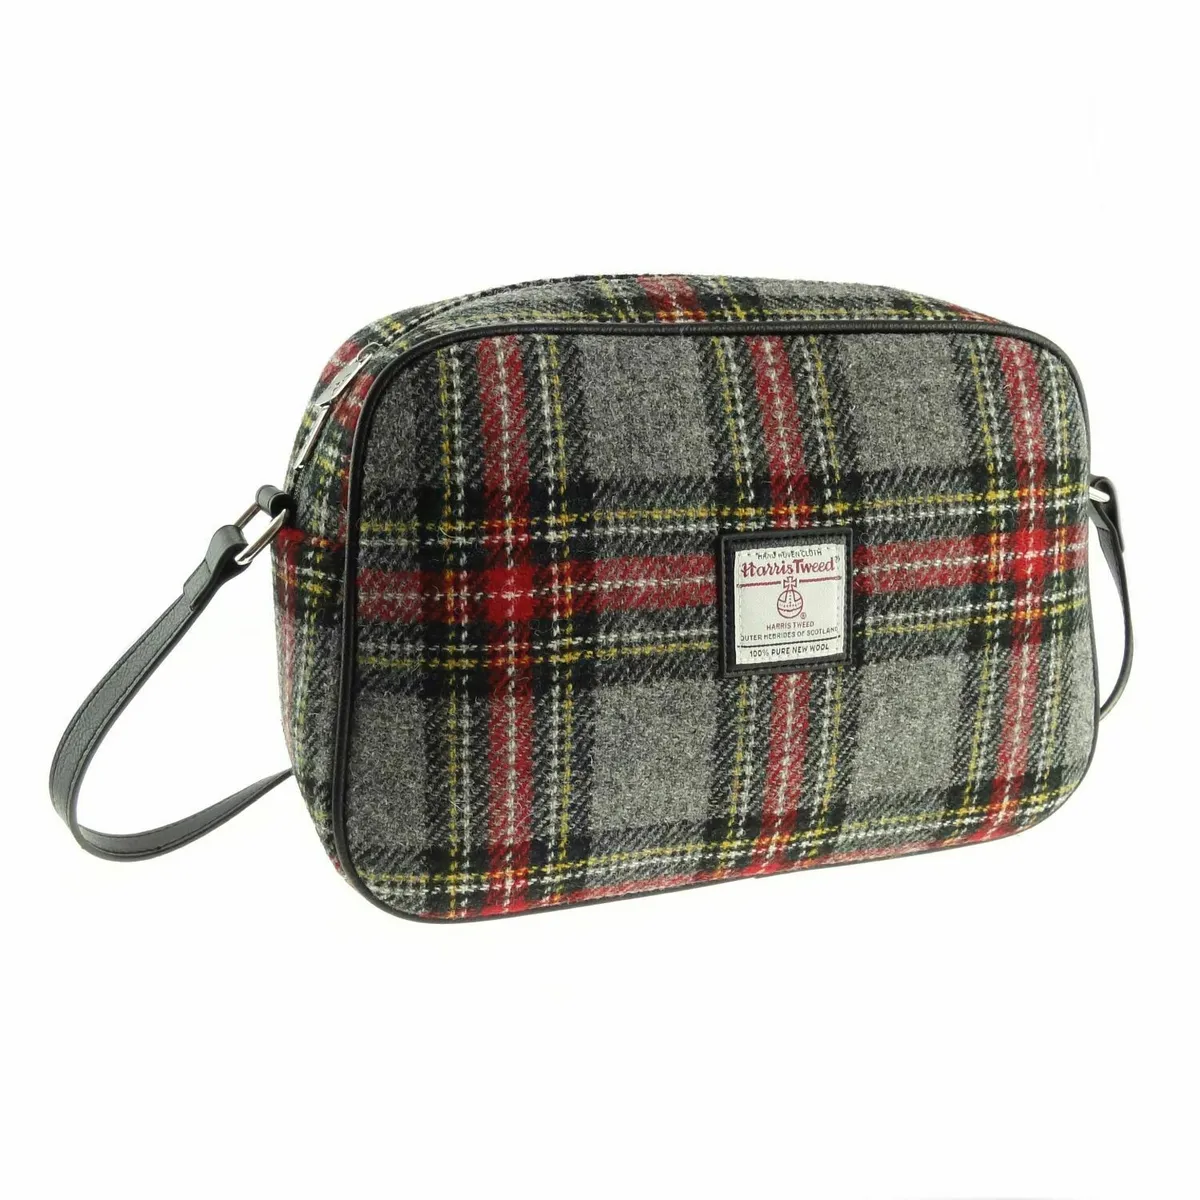 Harris Tweed 'Avon' Shoulder Bag in Grey & Red Tartan LB1205-COL96